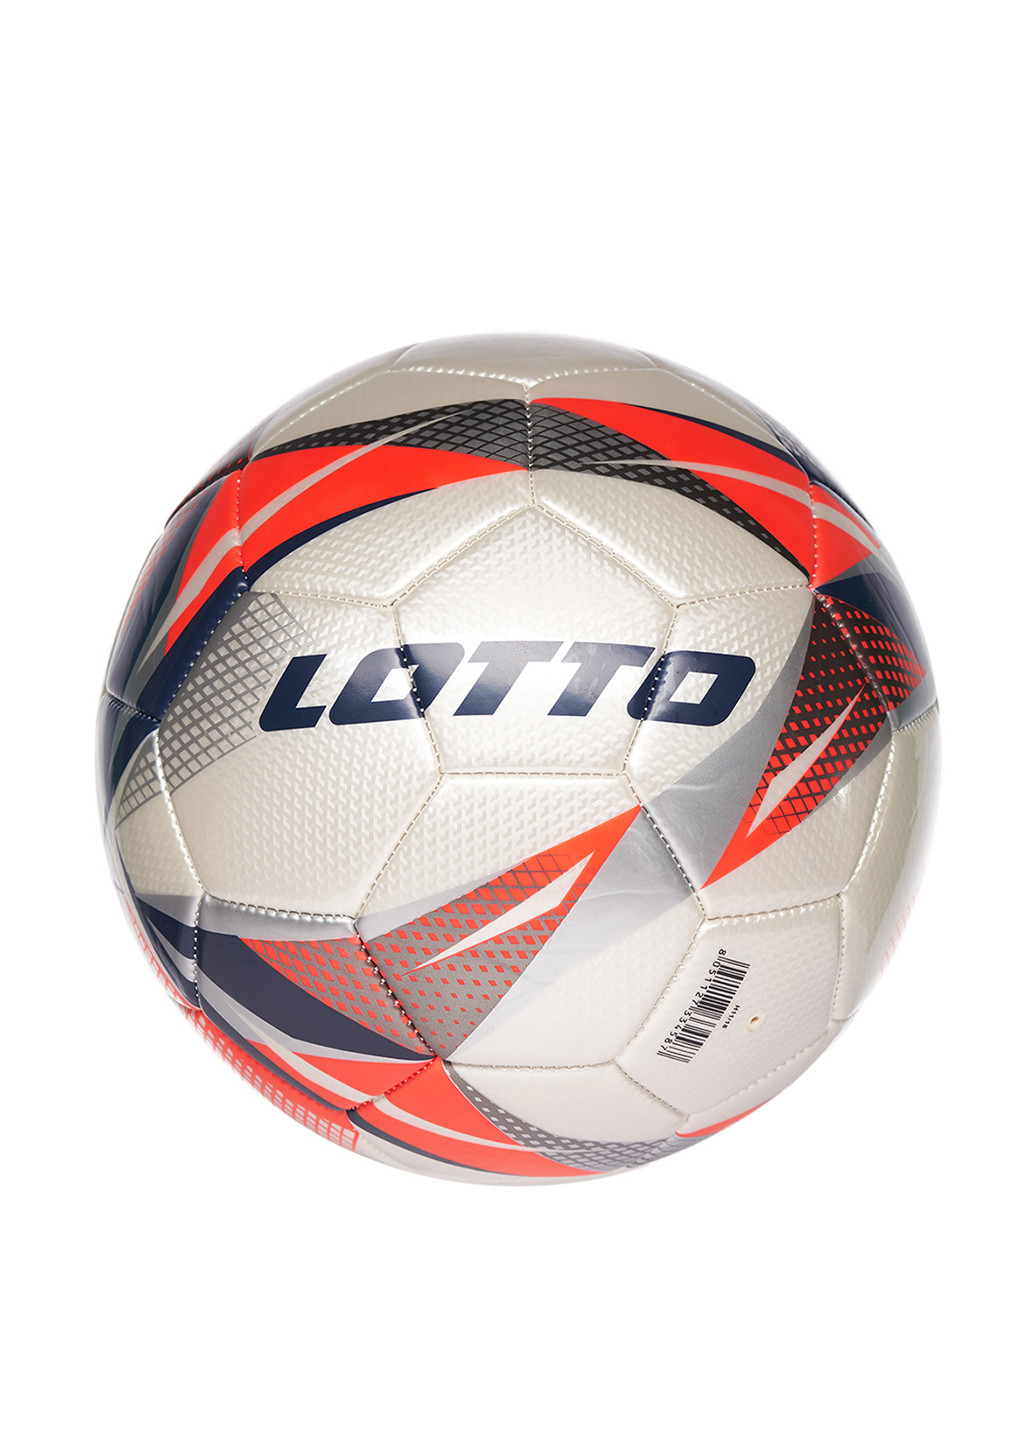 Мяч №5 Lotto ball fb 900 v 5 (134358479)